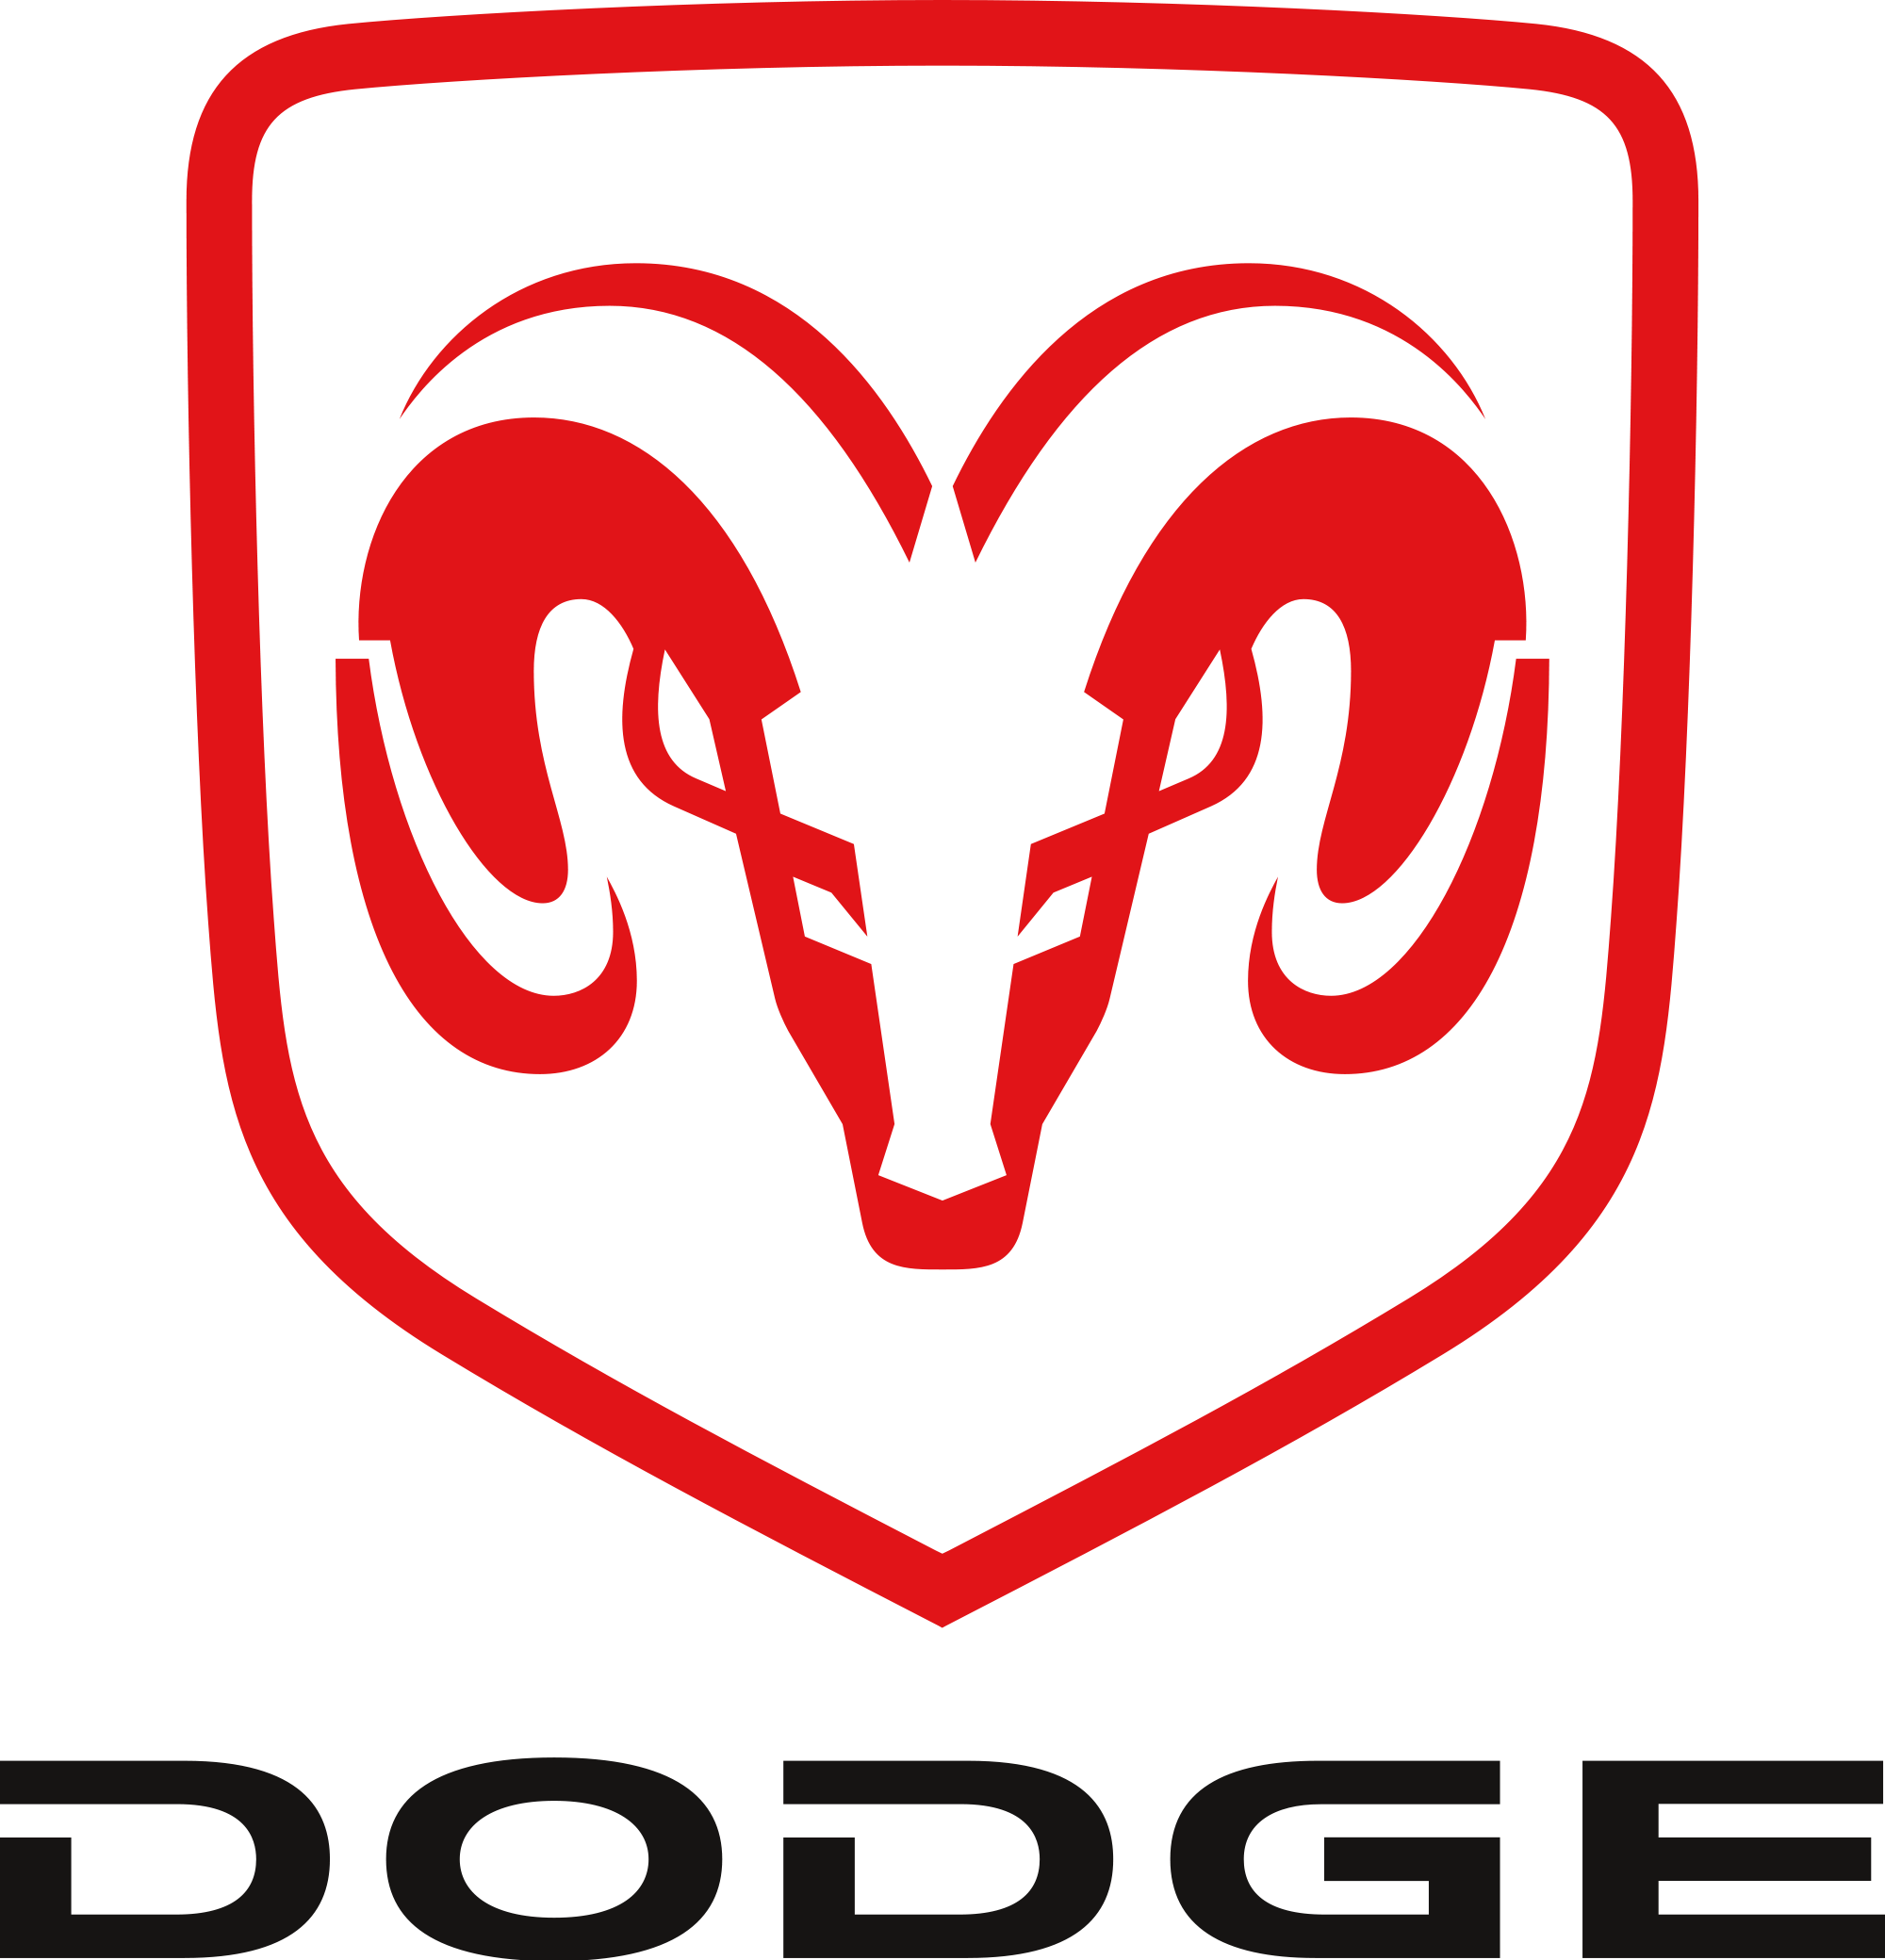 Dodge DO #7